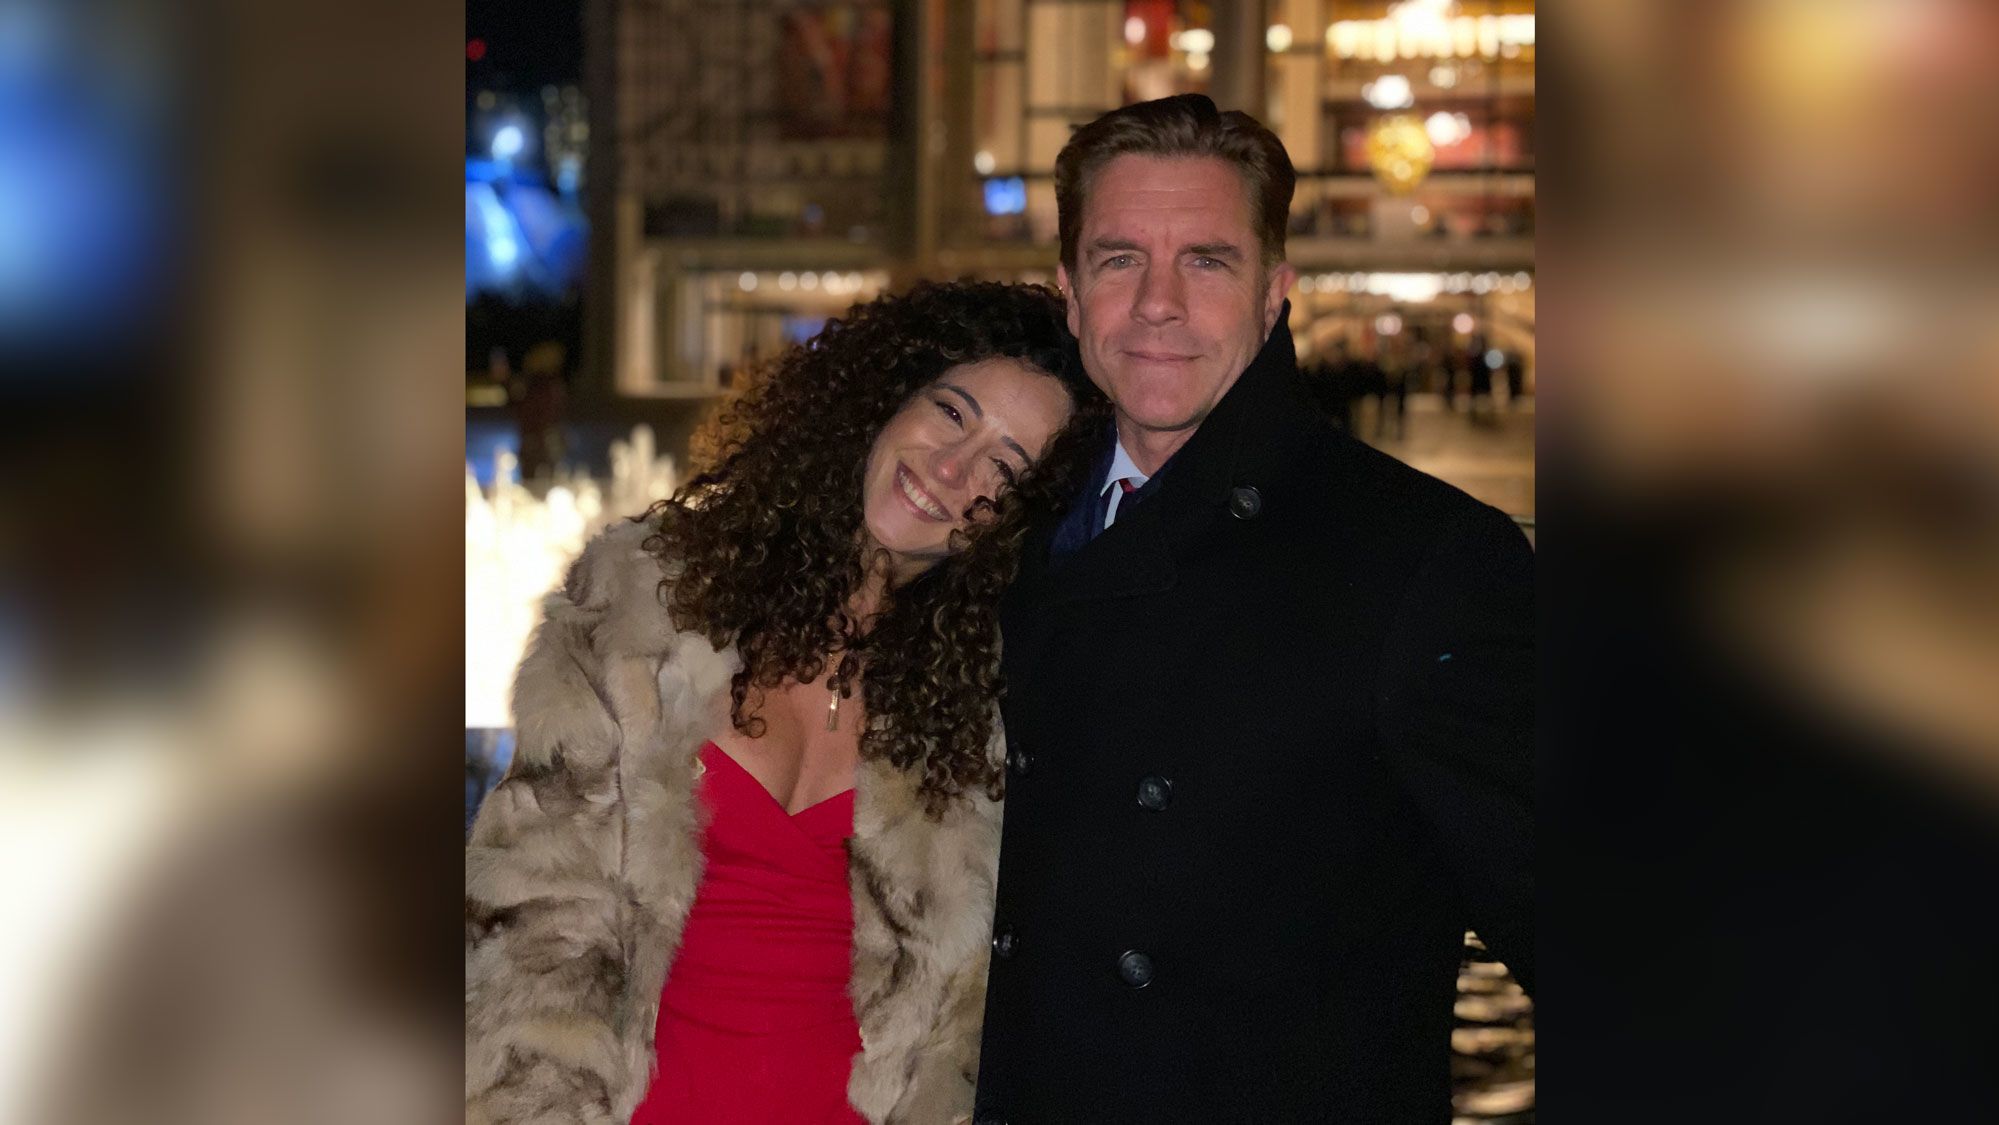 Ivan proposed to Rana in New York City on December 21, 2019. Photo: Anya Hanson